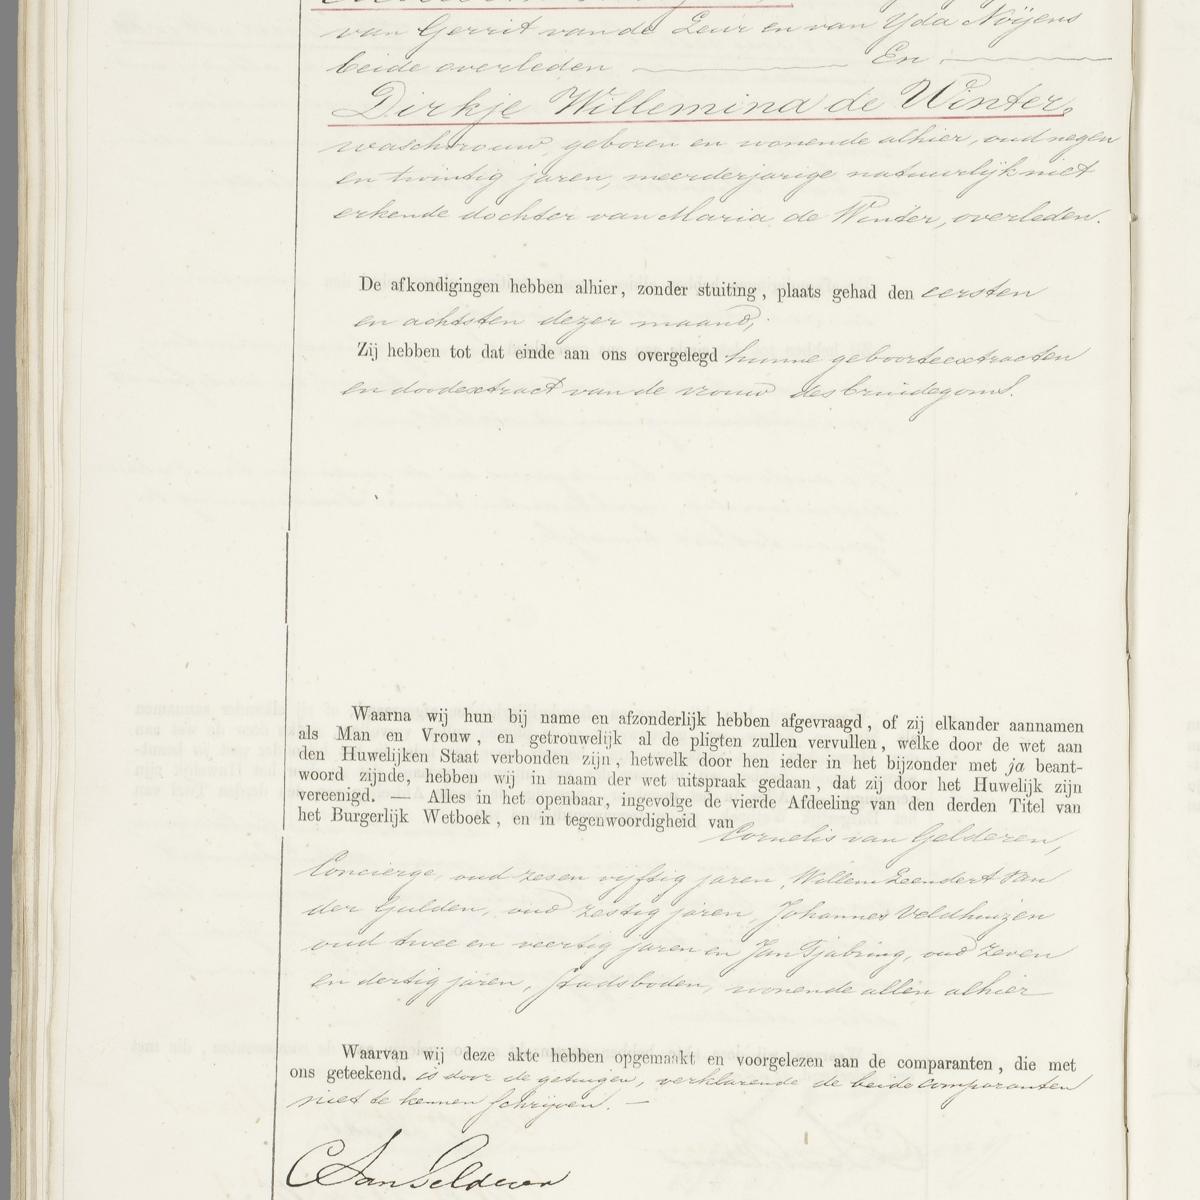 Civil registry of marriages, Utrecht, 1877, record 290